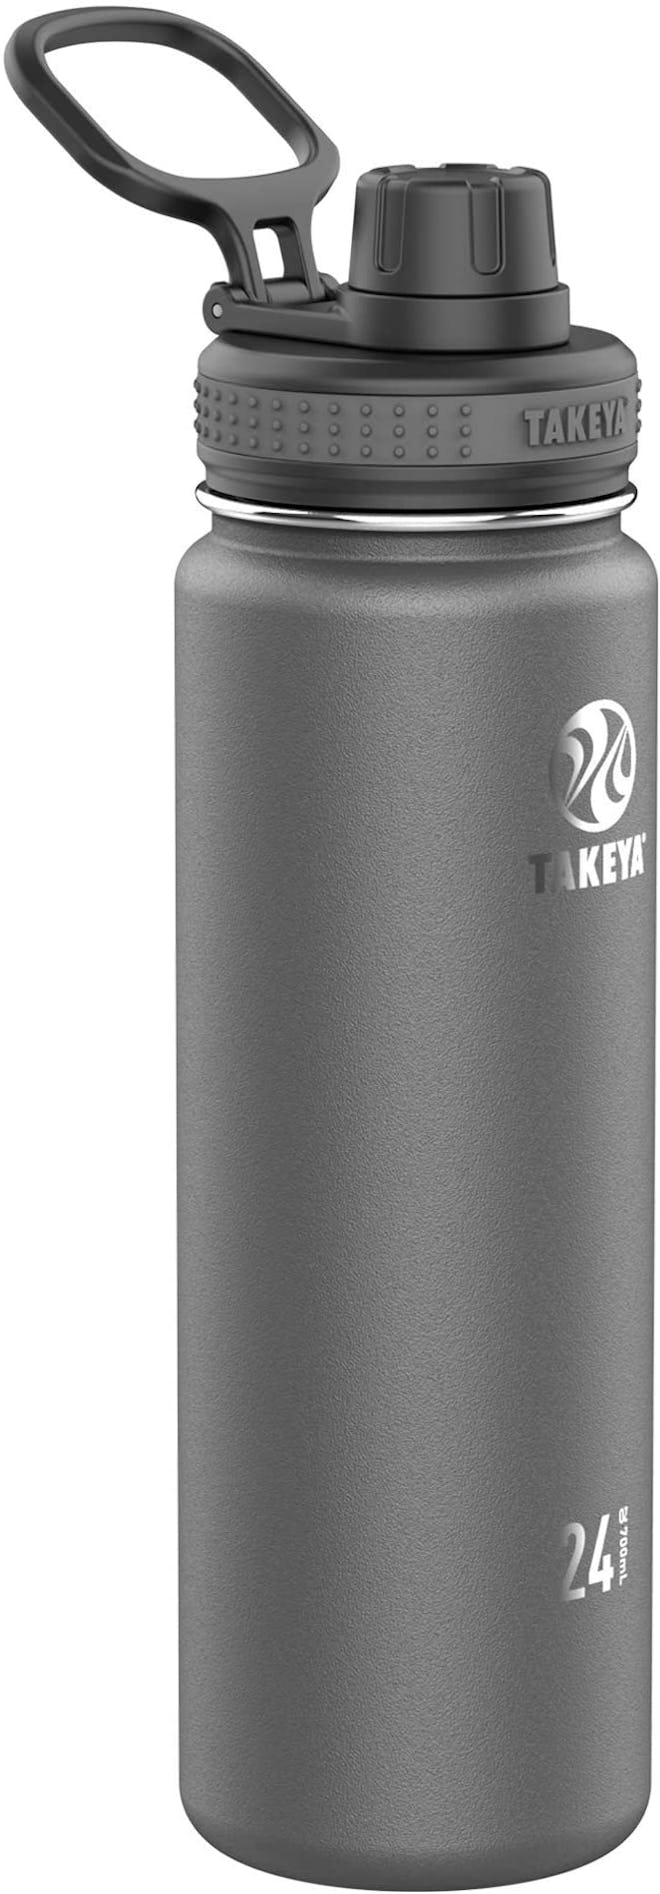 Overall Best Hydro Flask Alternative 